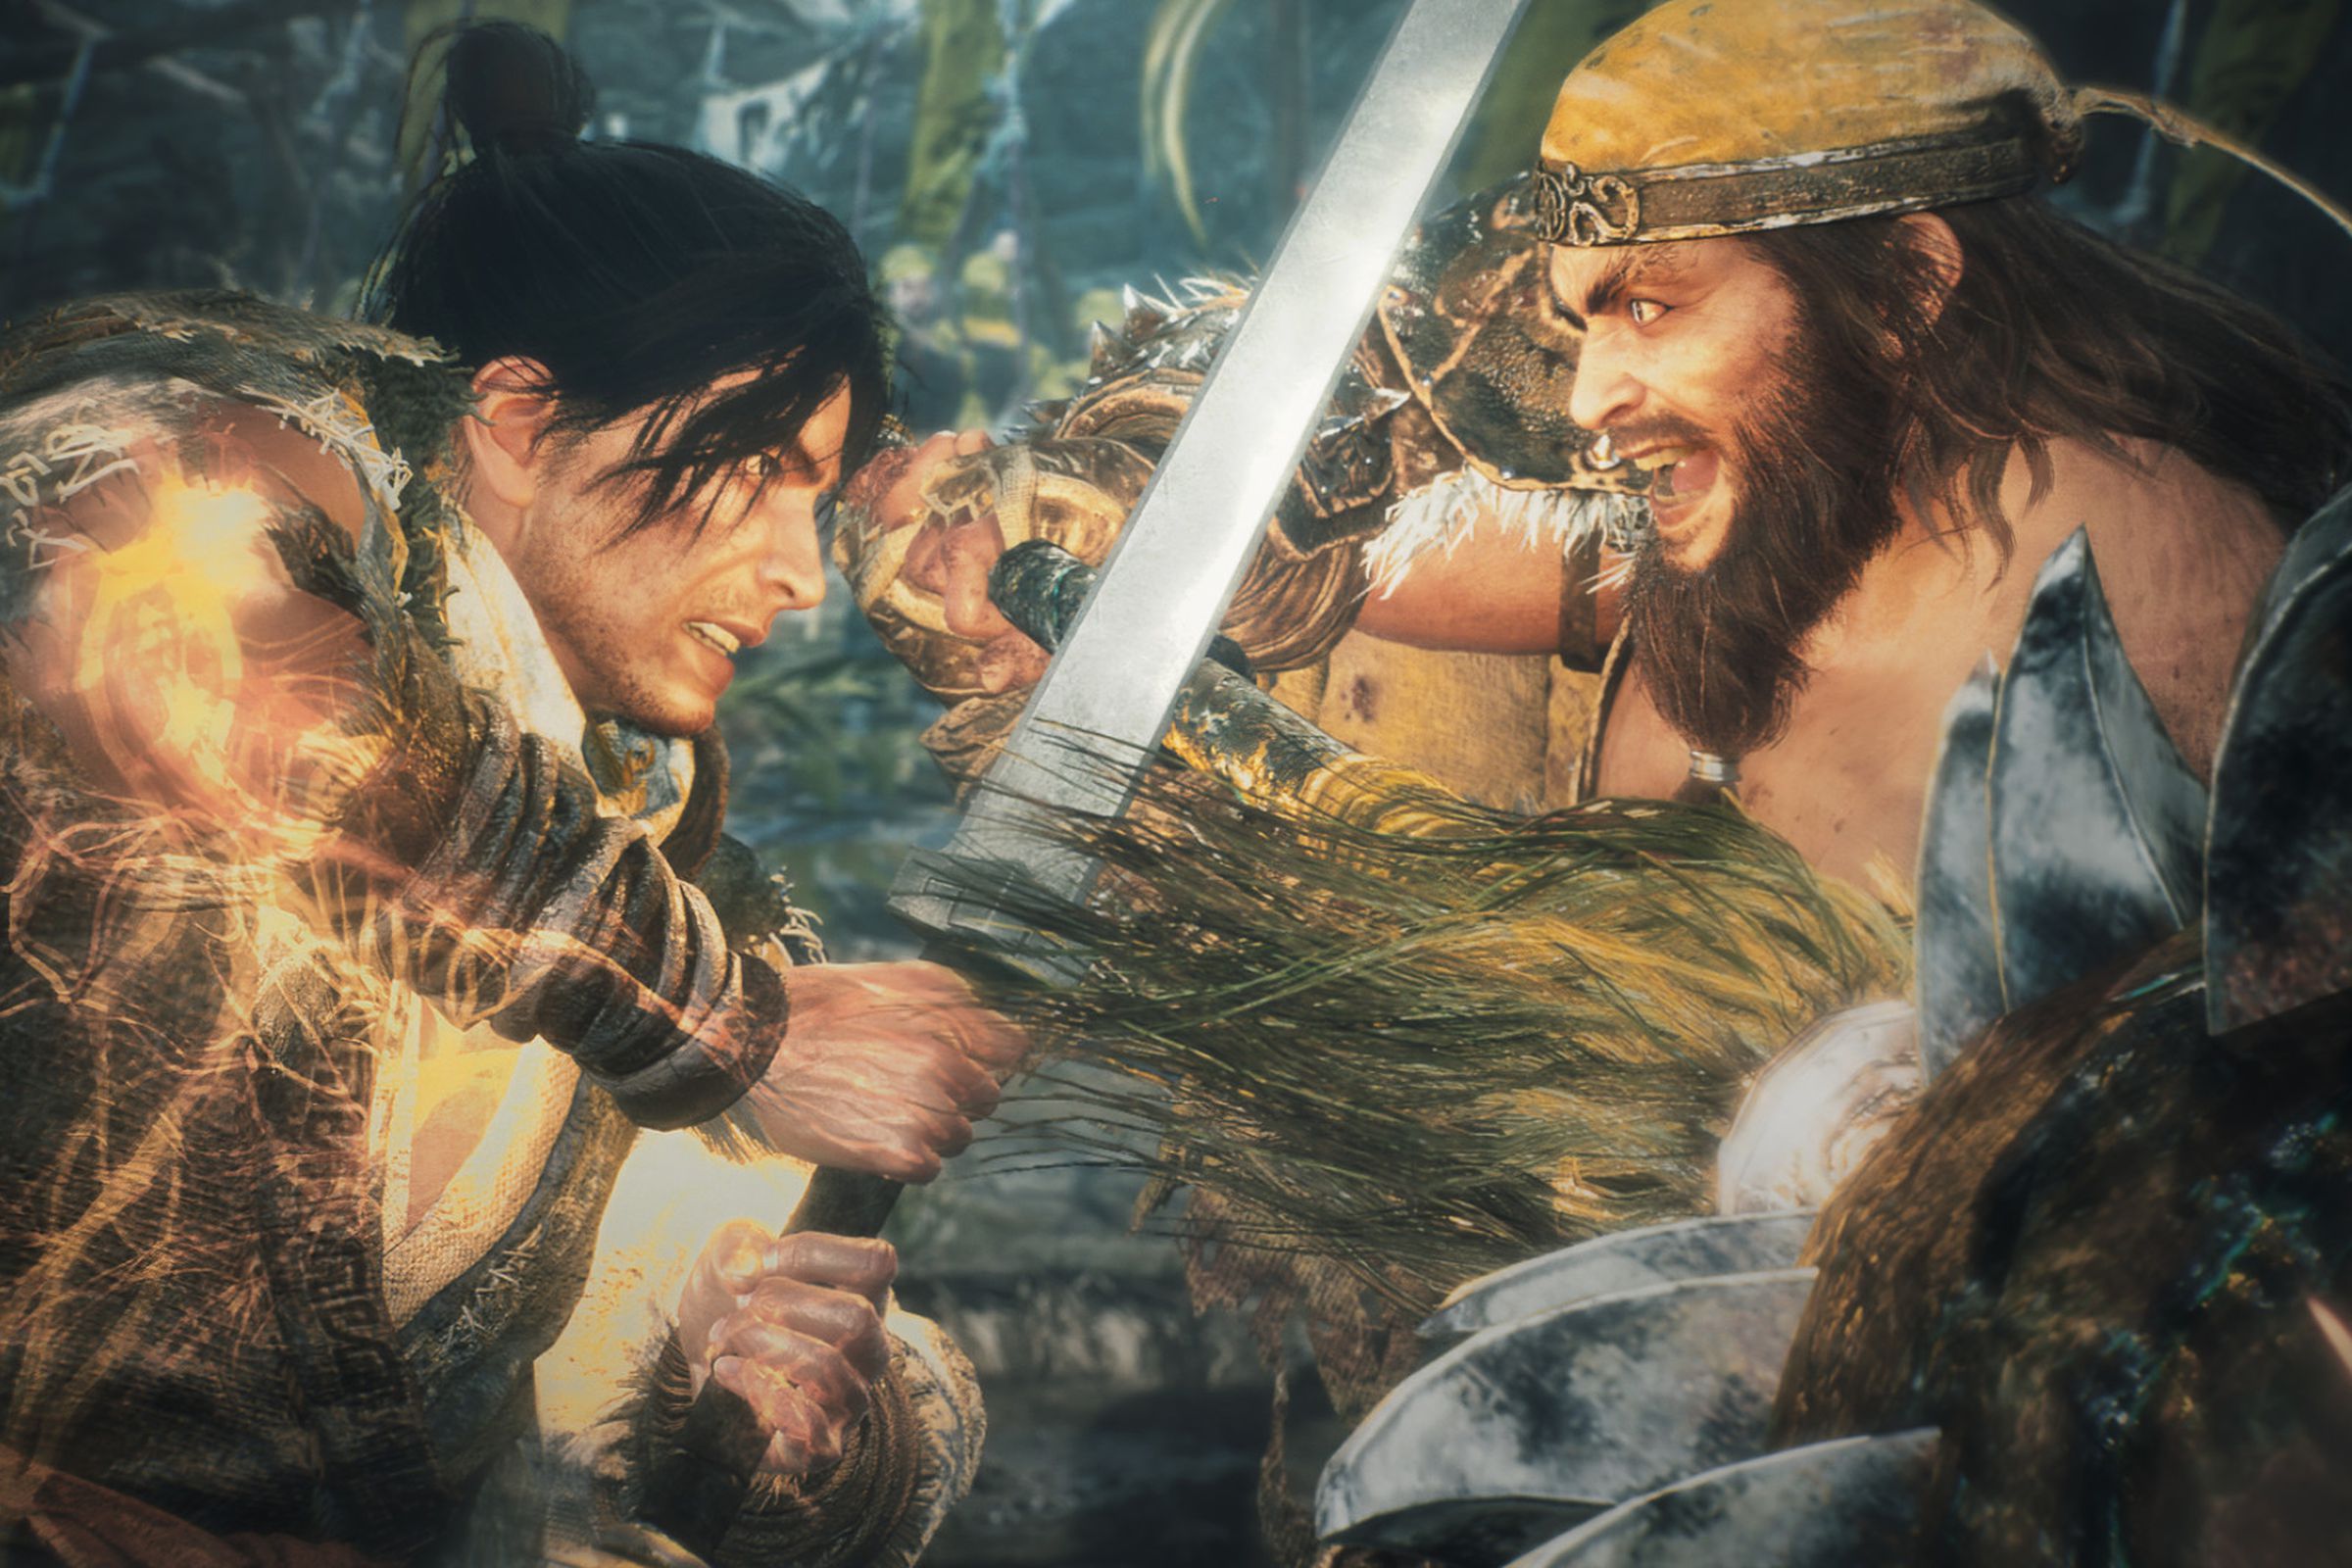 Screenshot from Wo Long: Fallen Dynasty featuring the player character clashing weapons with Zhang Liang